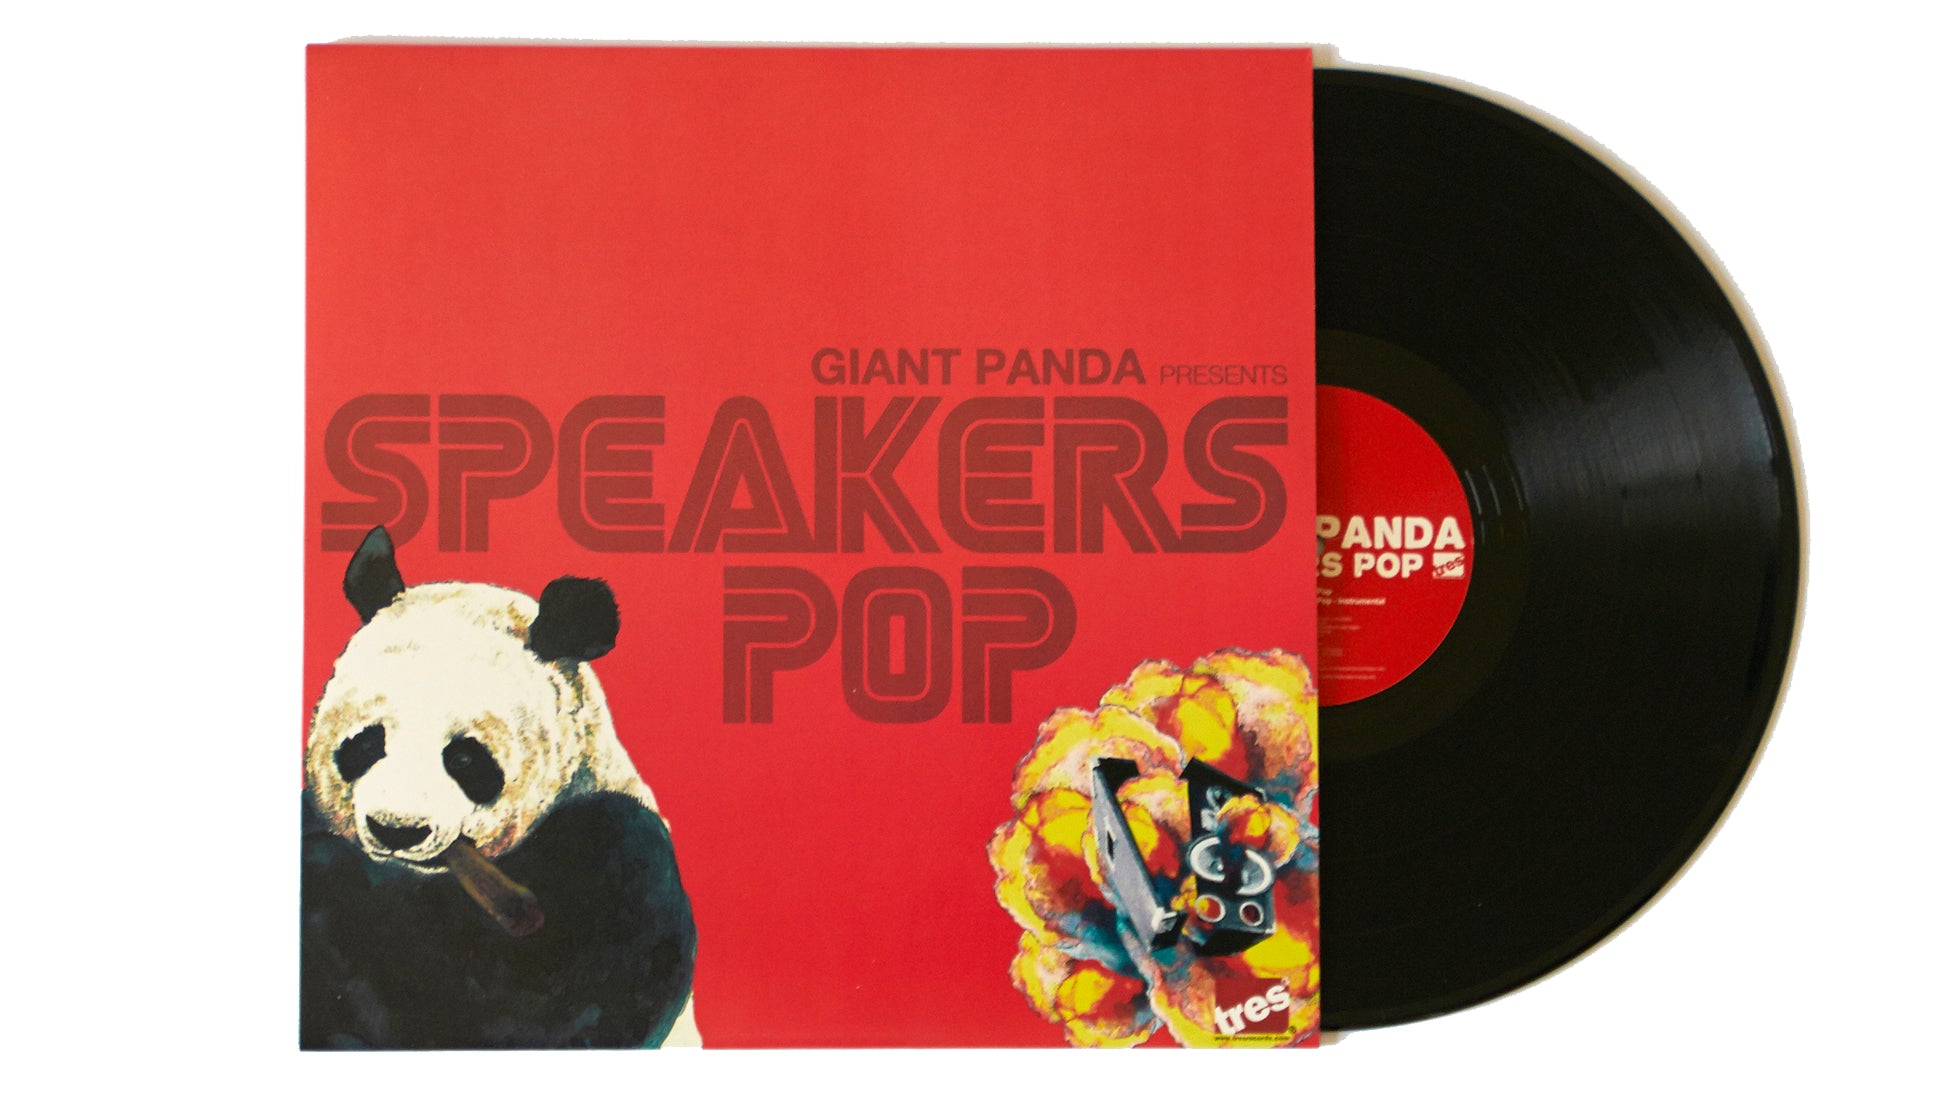 Giant Panda "Speakers Pop" (12")